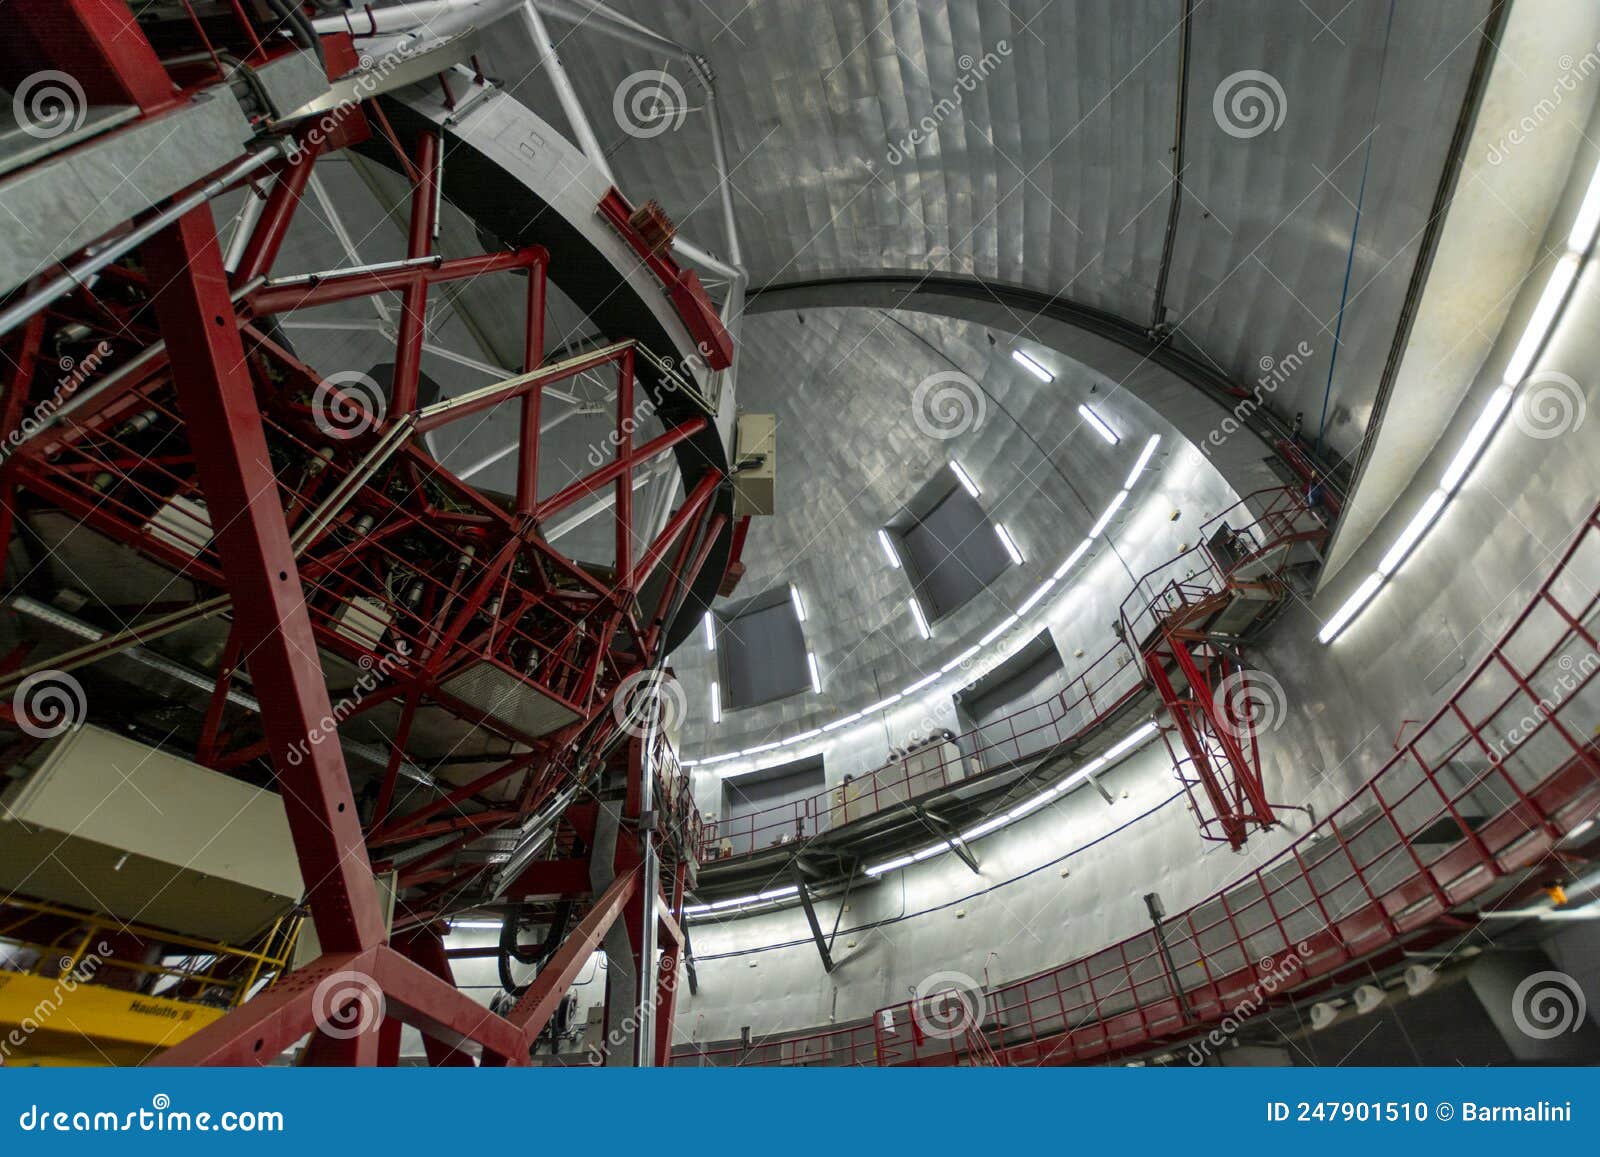 international space observatory and gran telescopio canarias telescope on la palma island located on highest mountain range roque